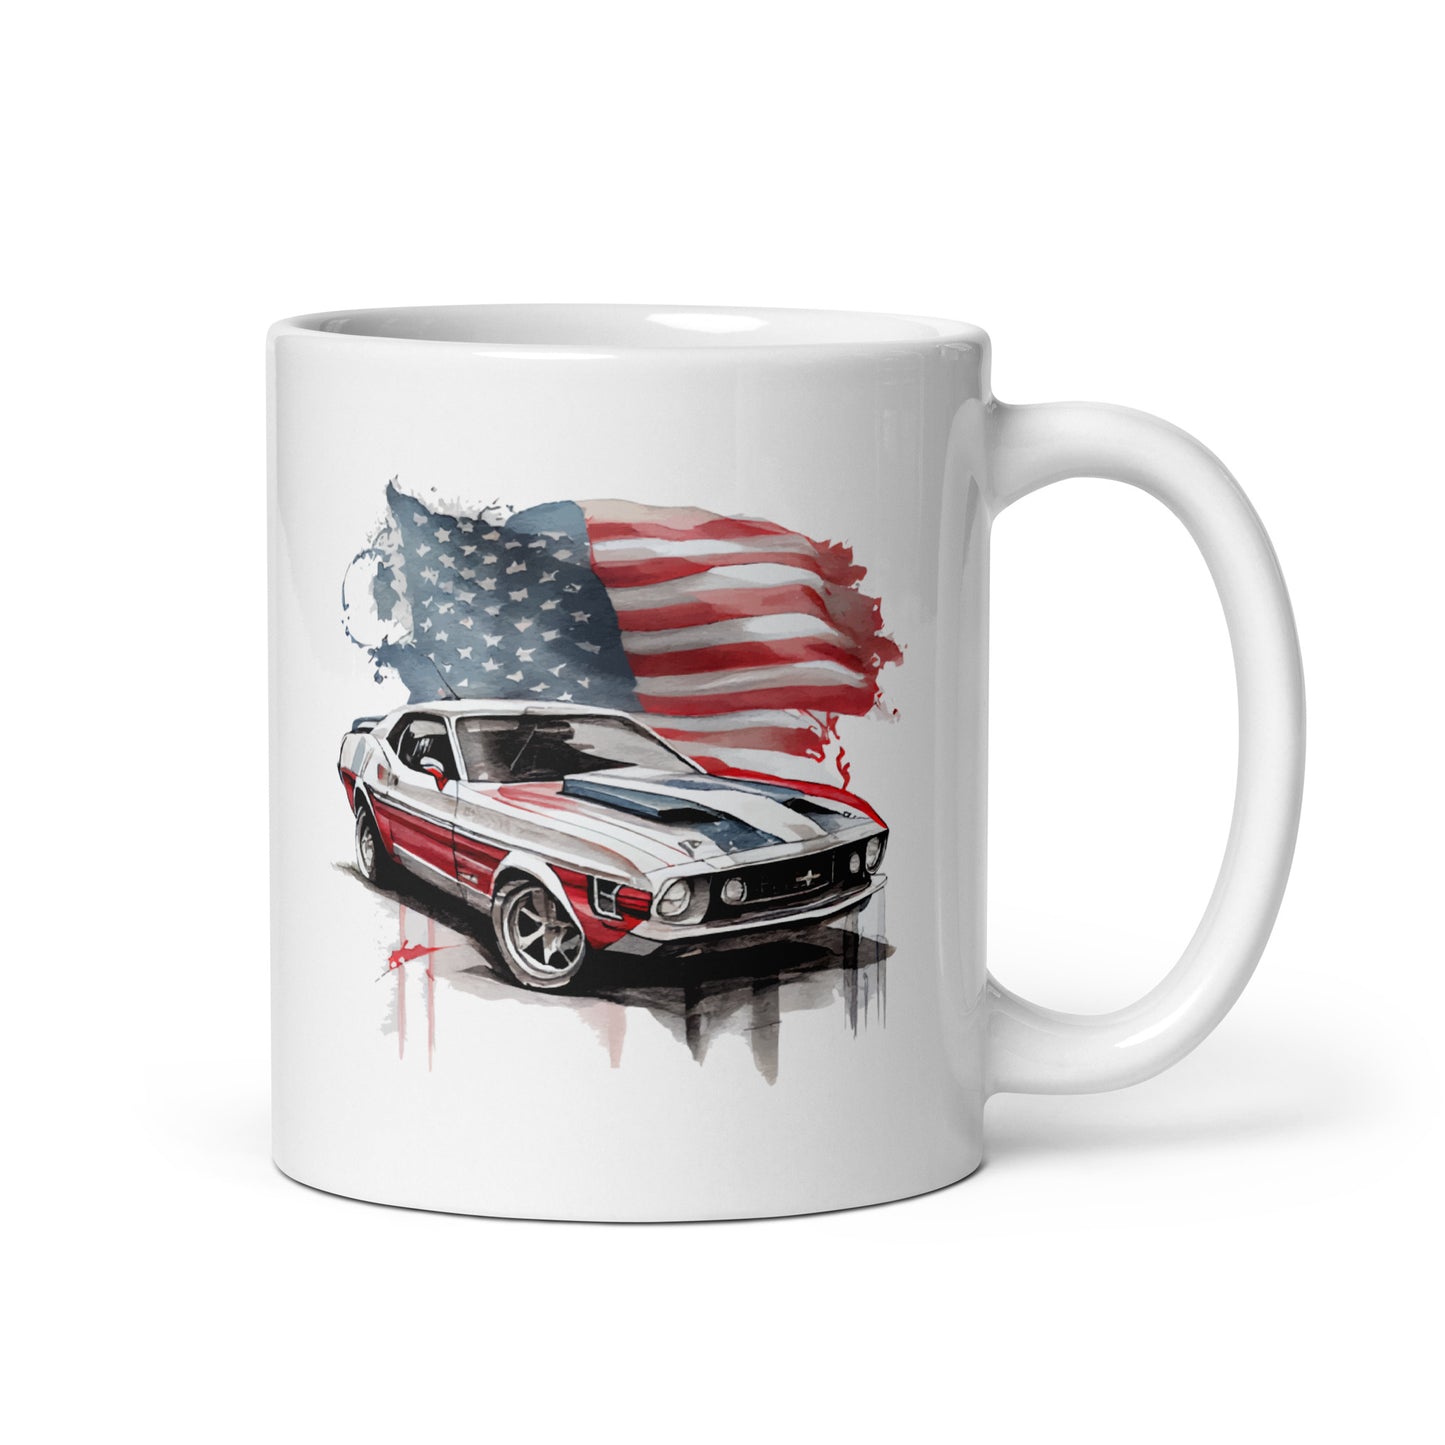 American classic car, Patriotic designs, USA flag, watercolor illustration - White glossy mug